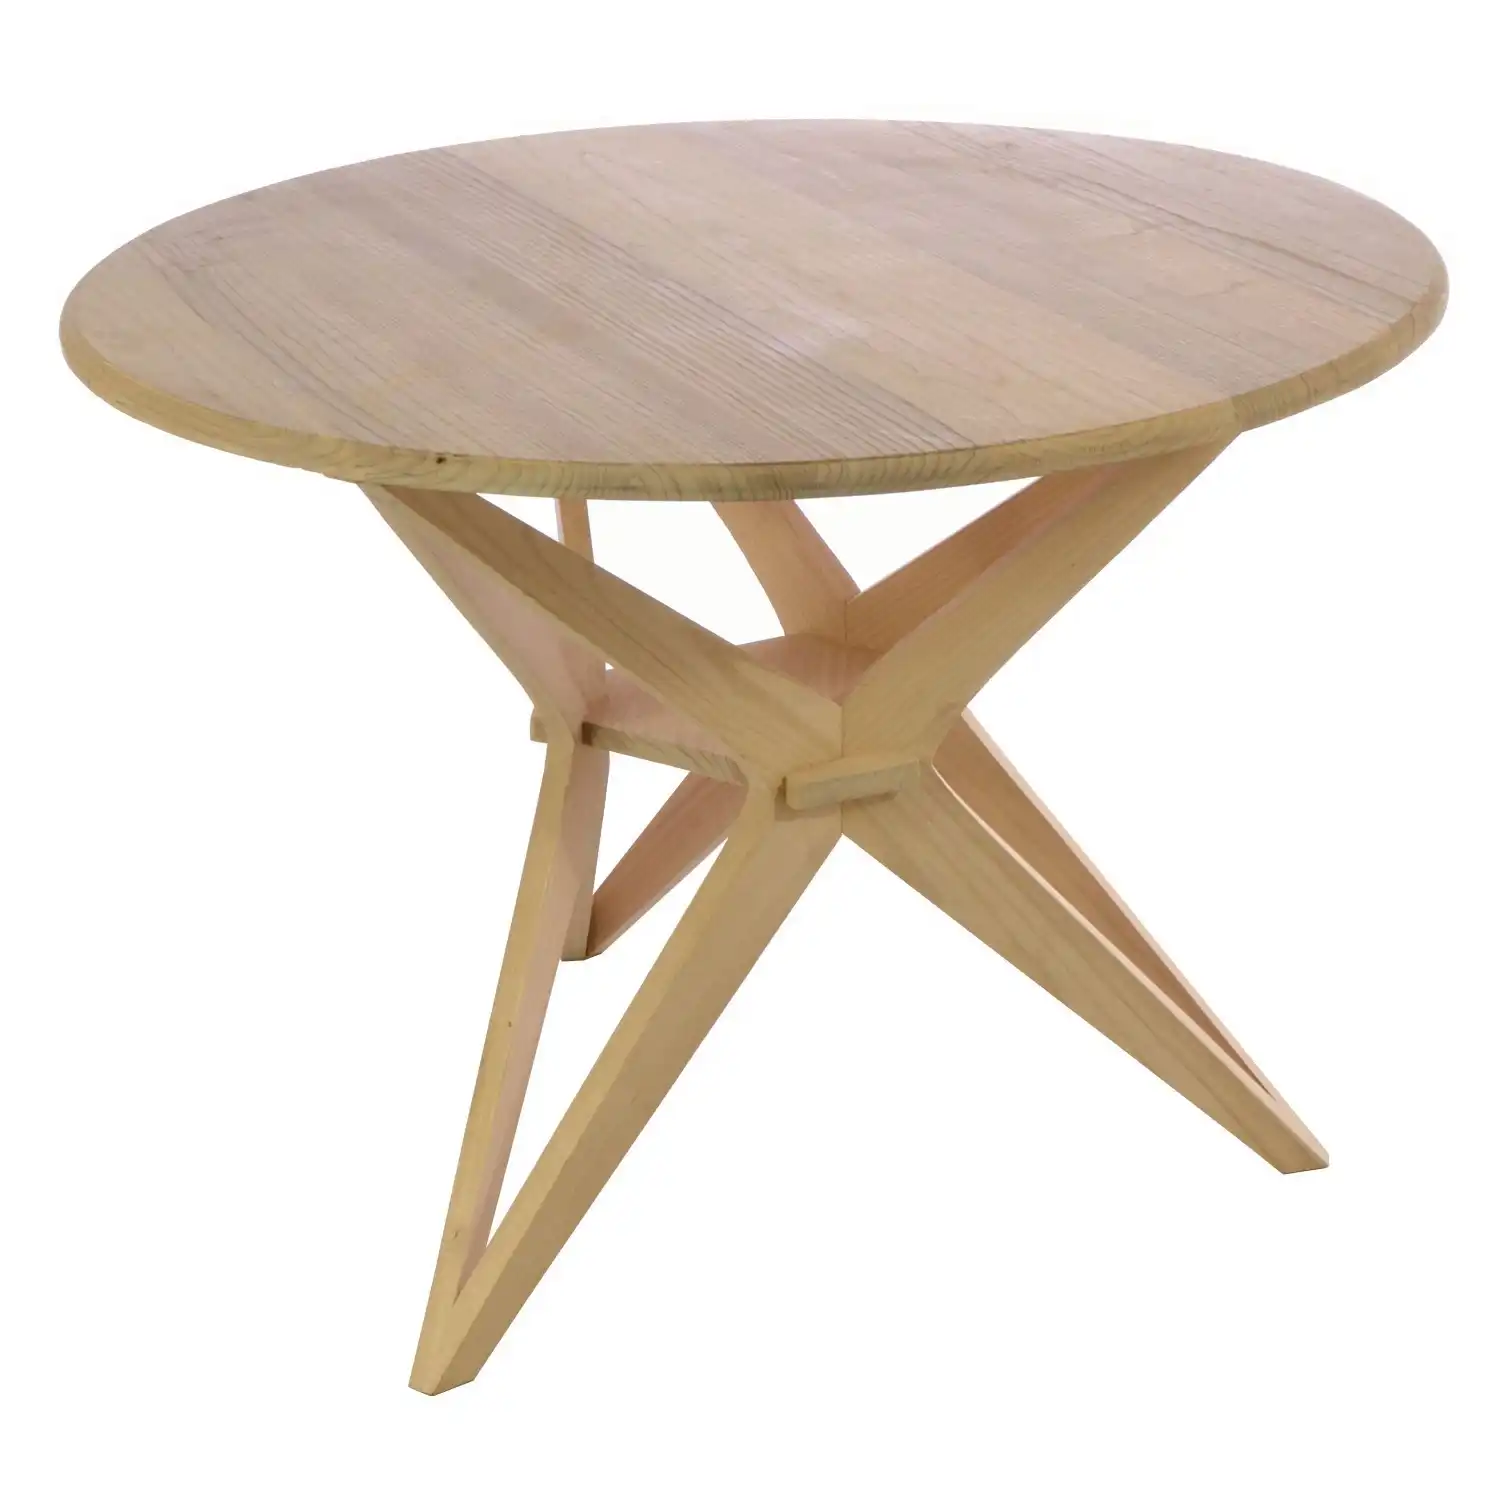 Light Wood Large Round Dining Table 100cm Diameter